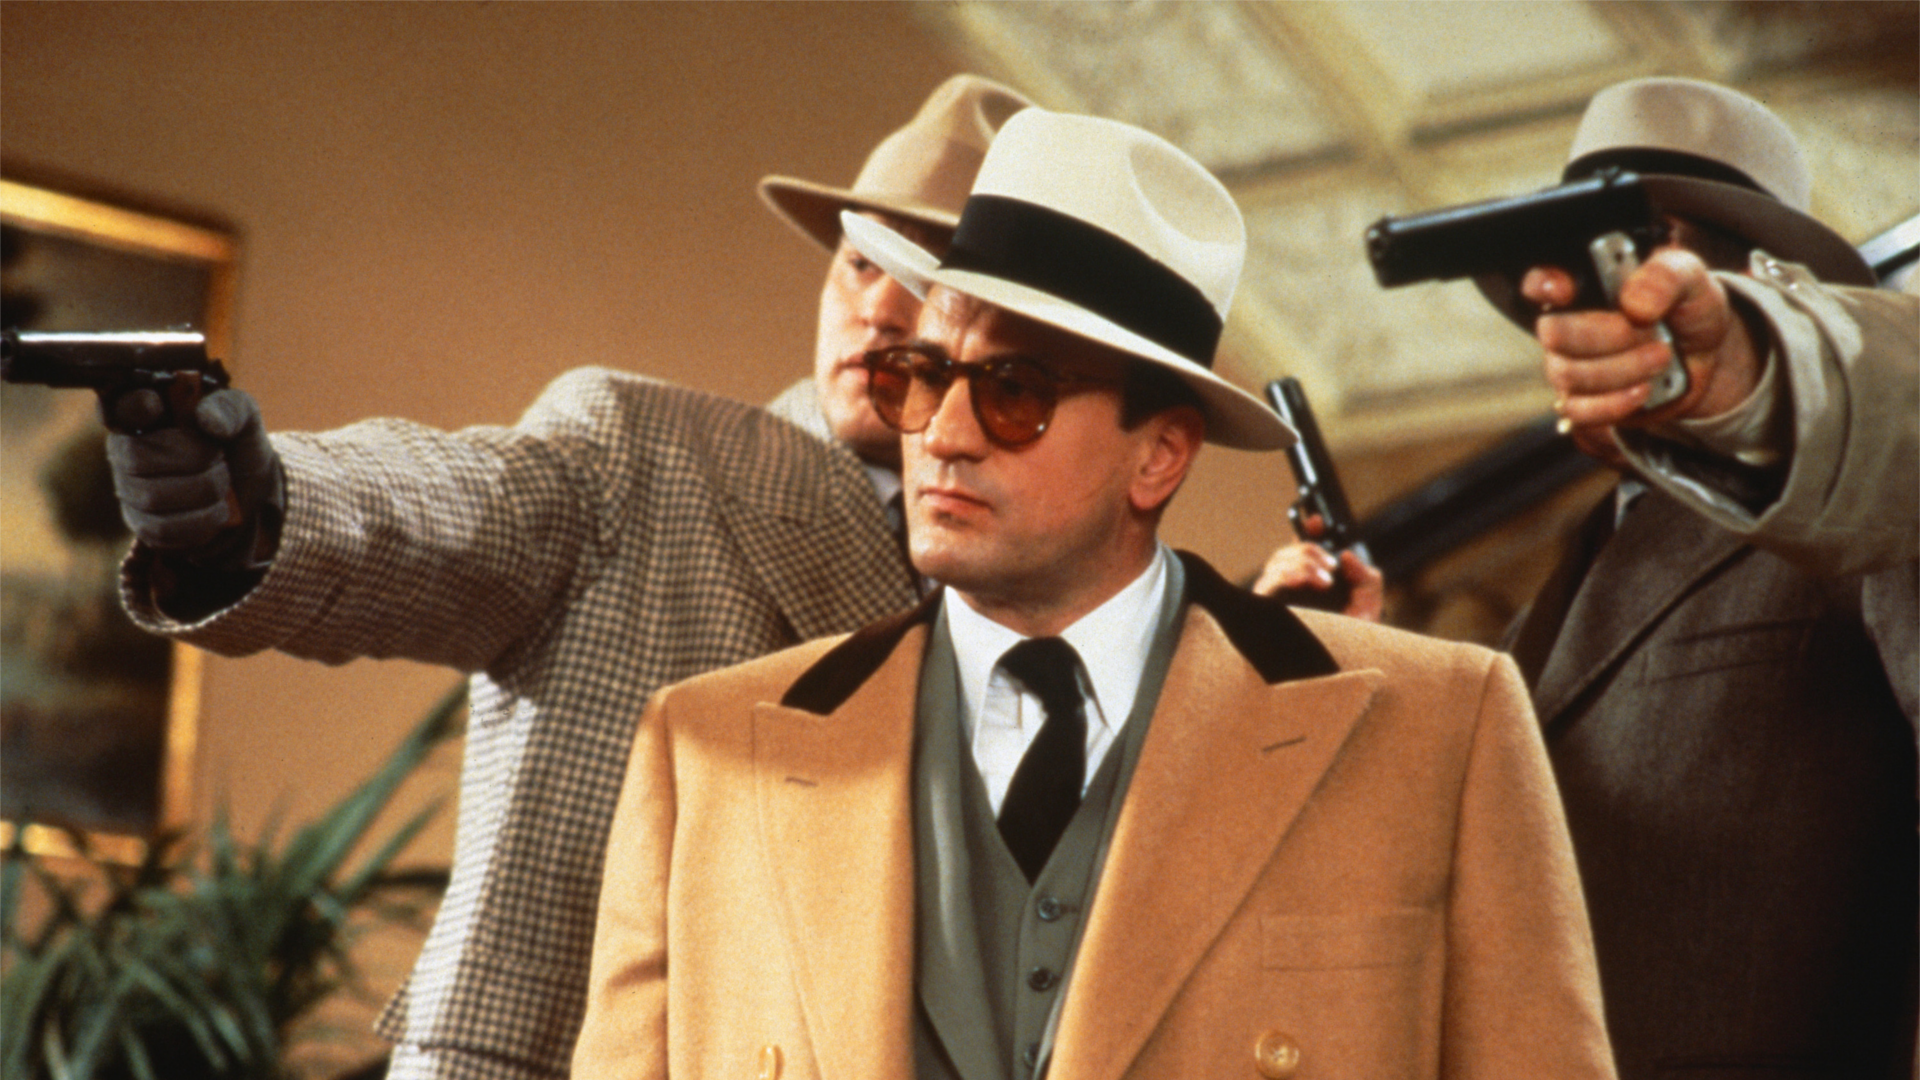 A look at Robert De Niro’s transformation into Al Capone